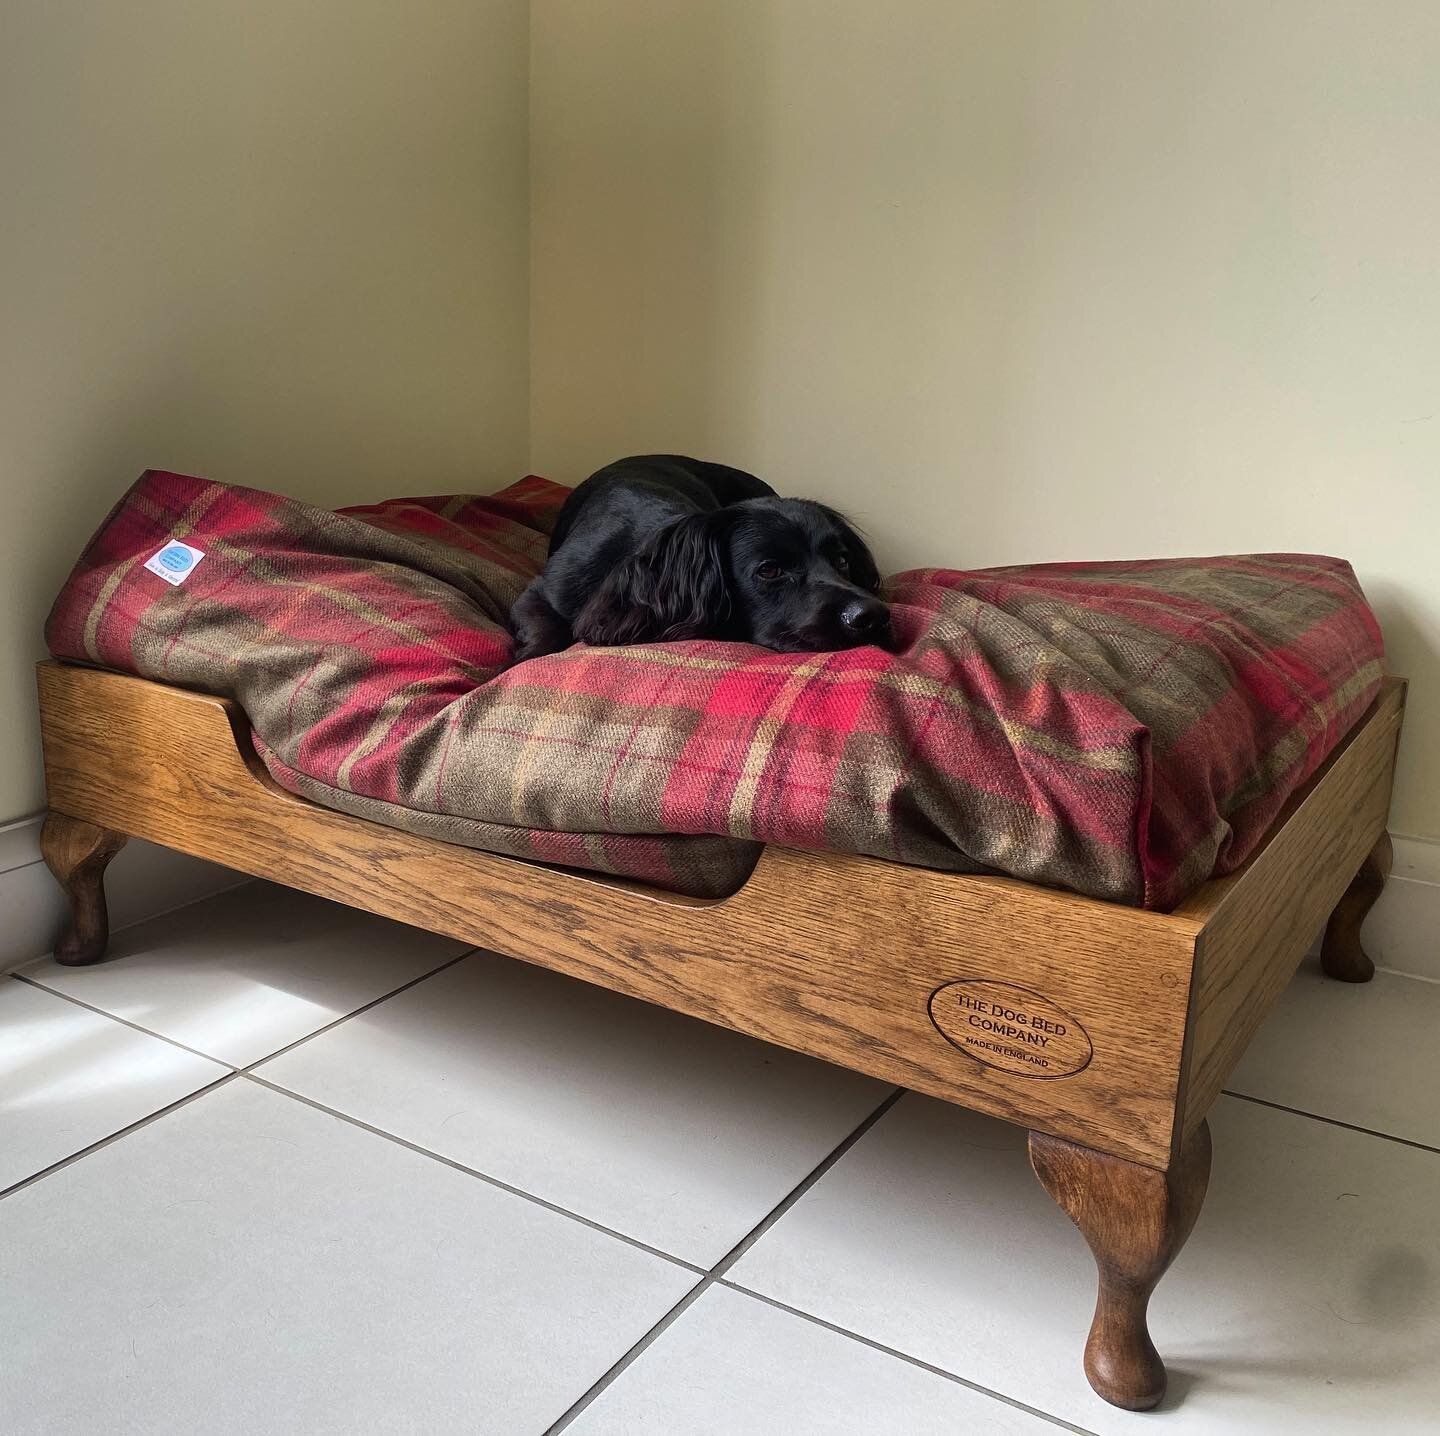 Douglas is going nowhere! #woodendogbed #luxurydogbed #sleepingdog #countryliving #handmade #madeinengland #dogsofinstagram